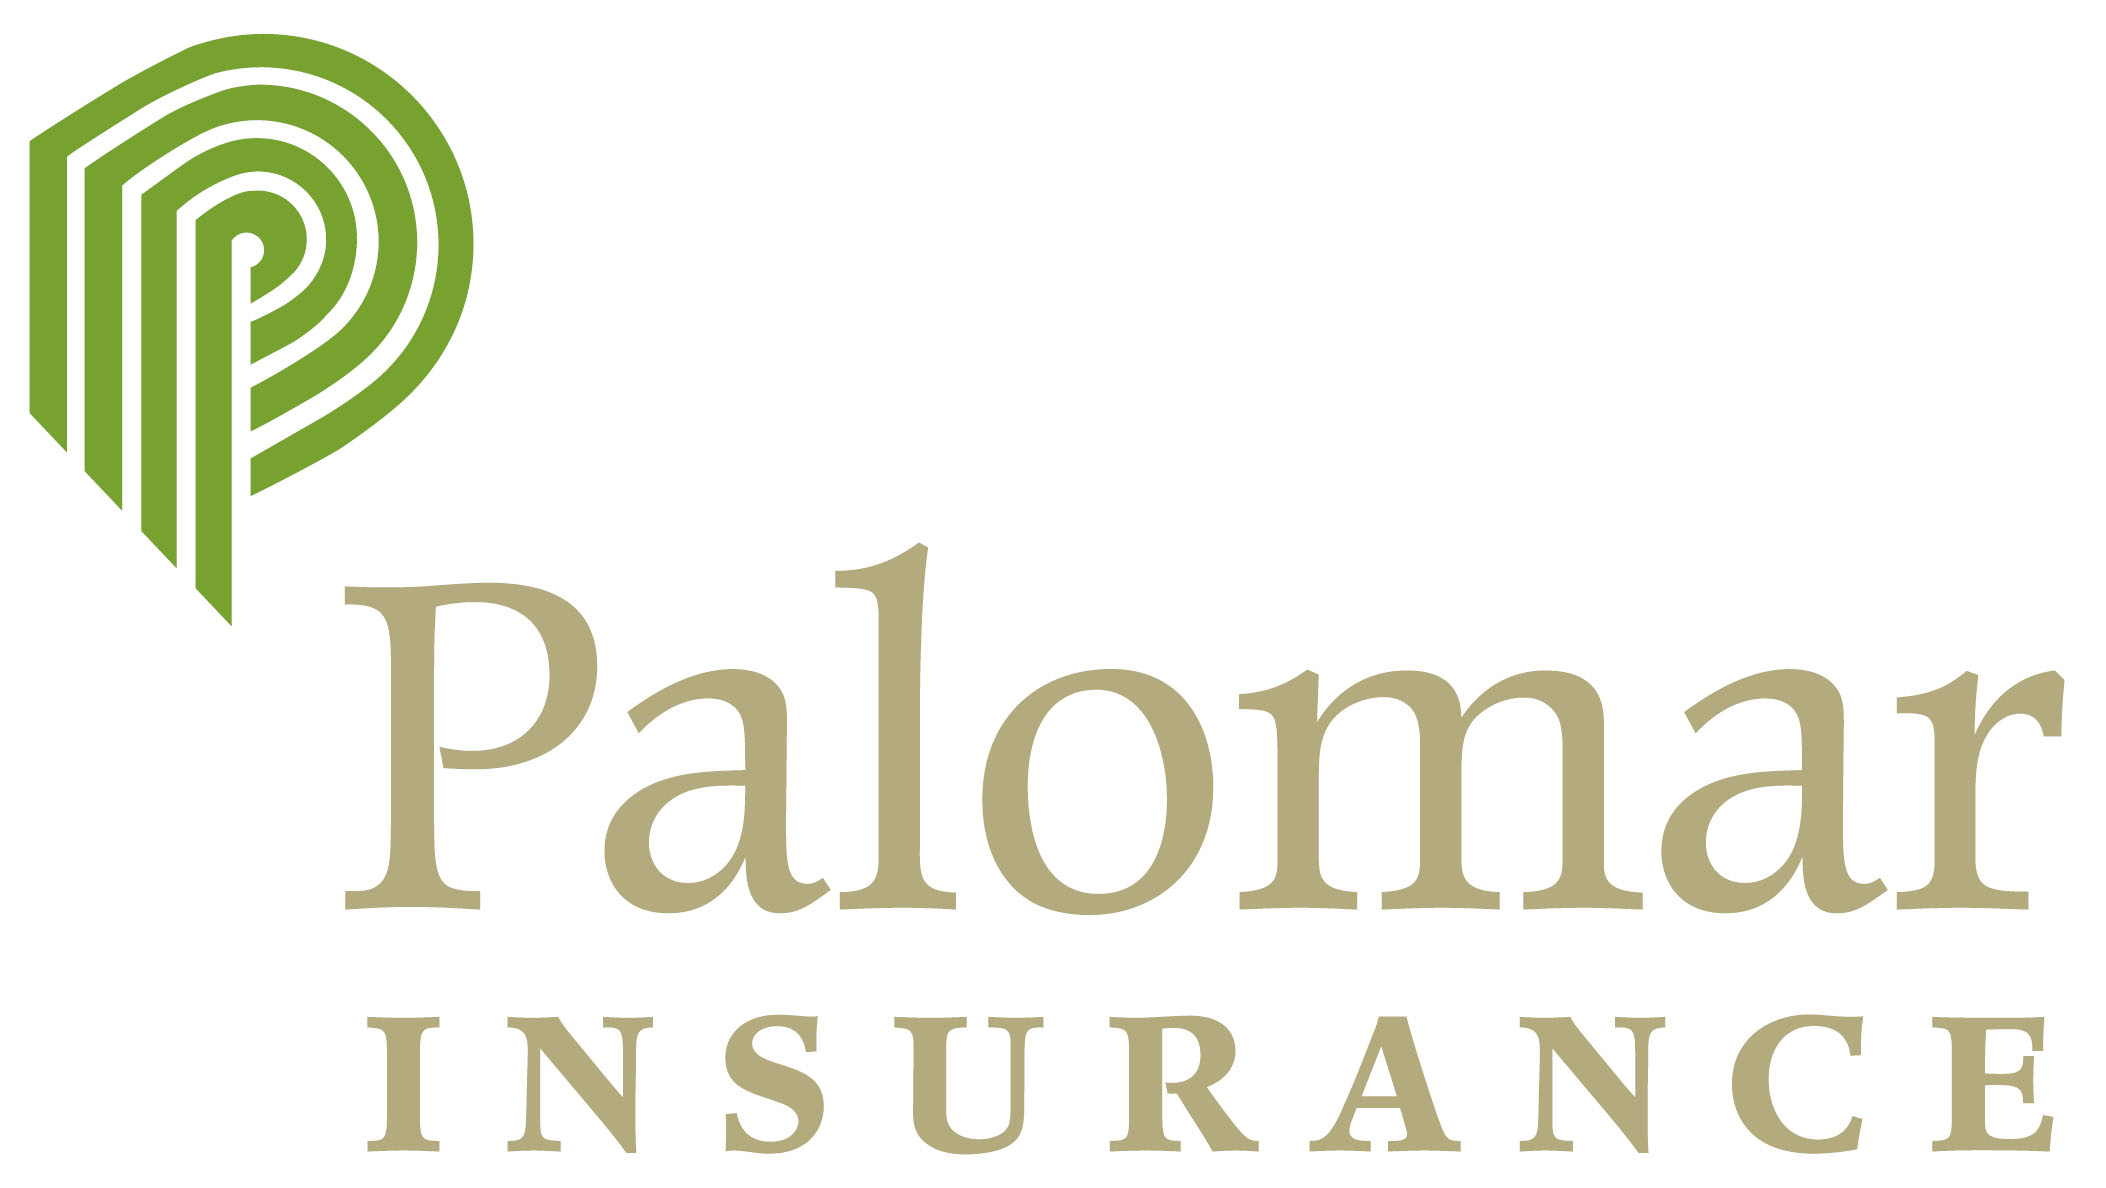 Palomar Insurance Corp.